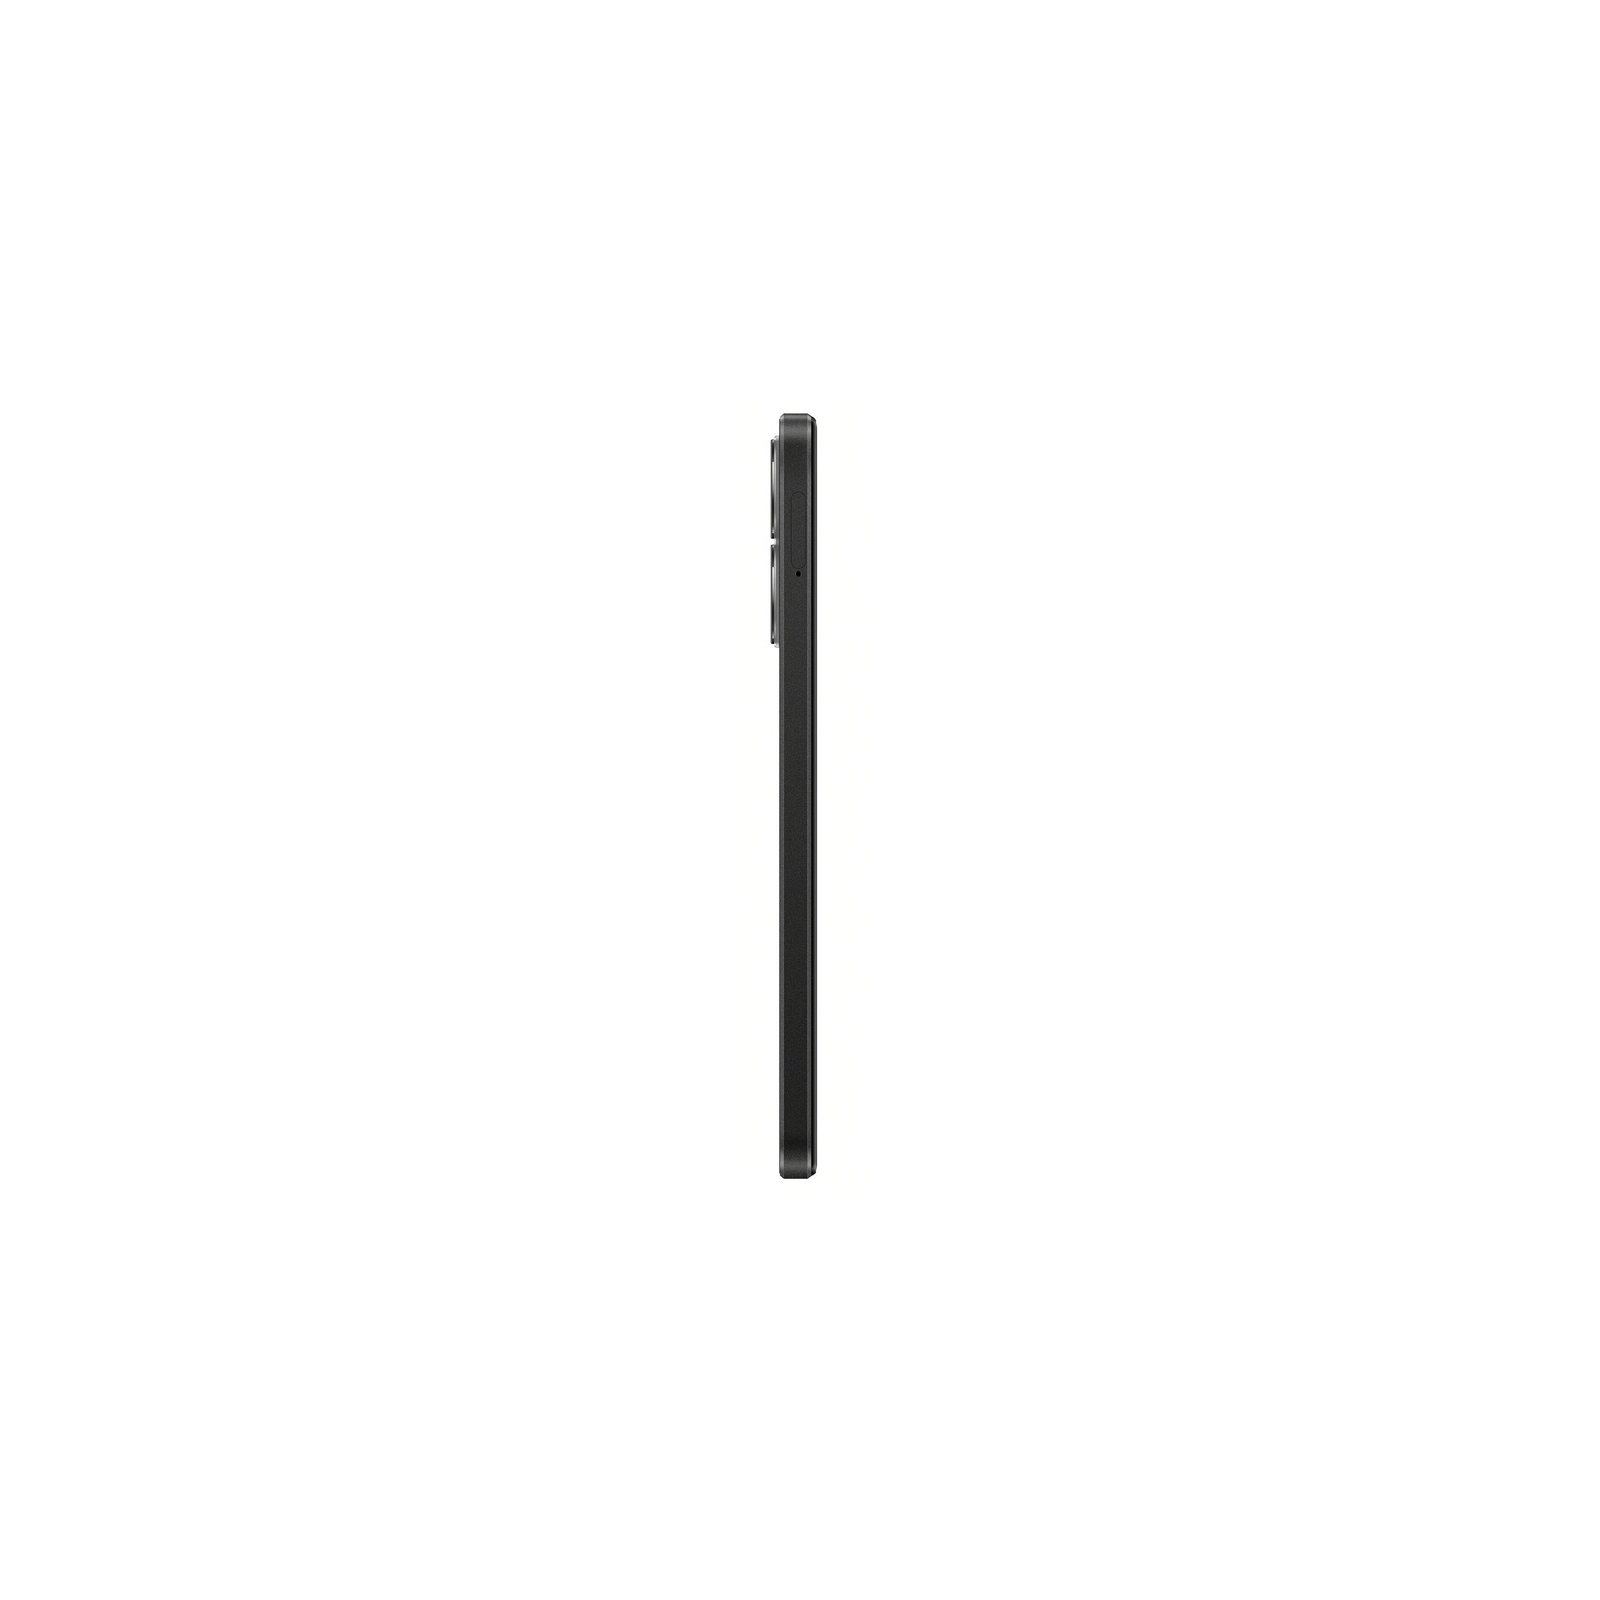 Мобильный телефон Oppo A78 8/128GB Mist Black (OFCPH2565_BLACK_128) изображение 4